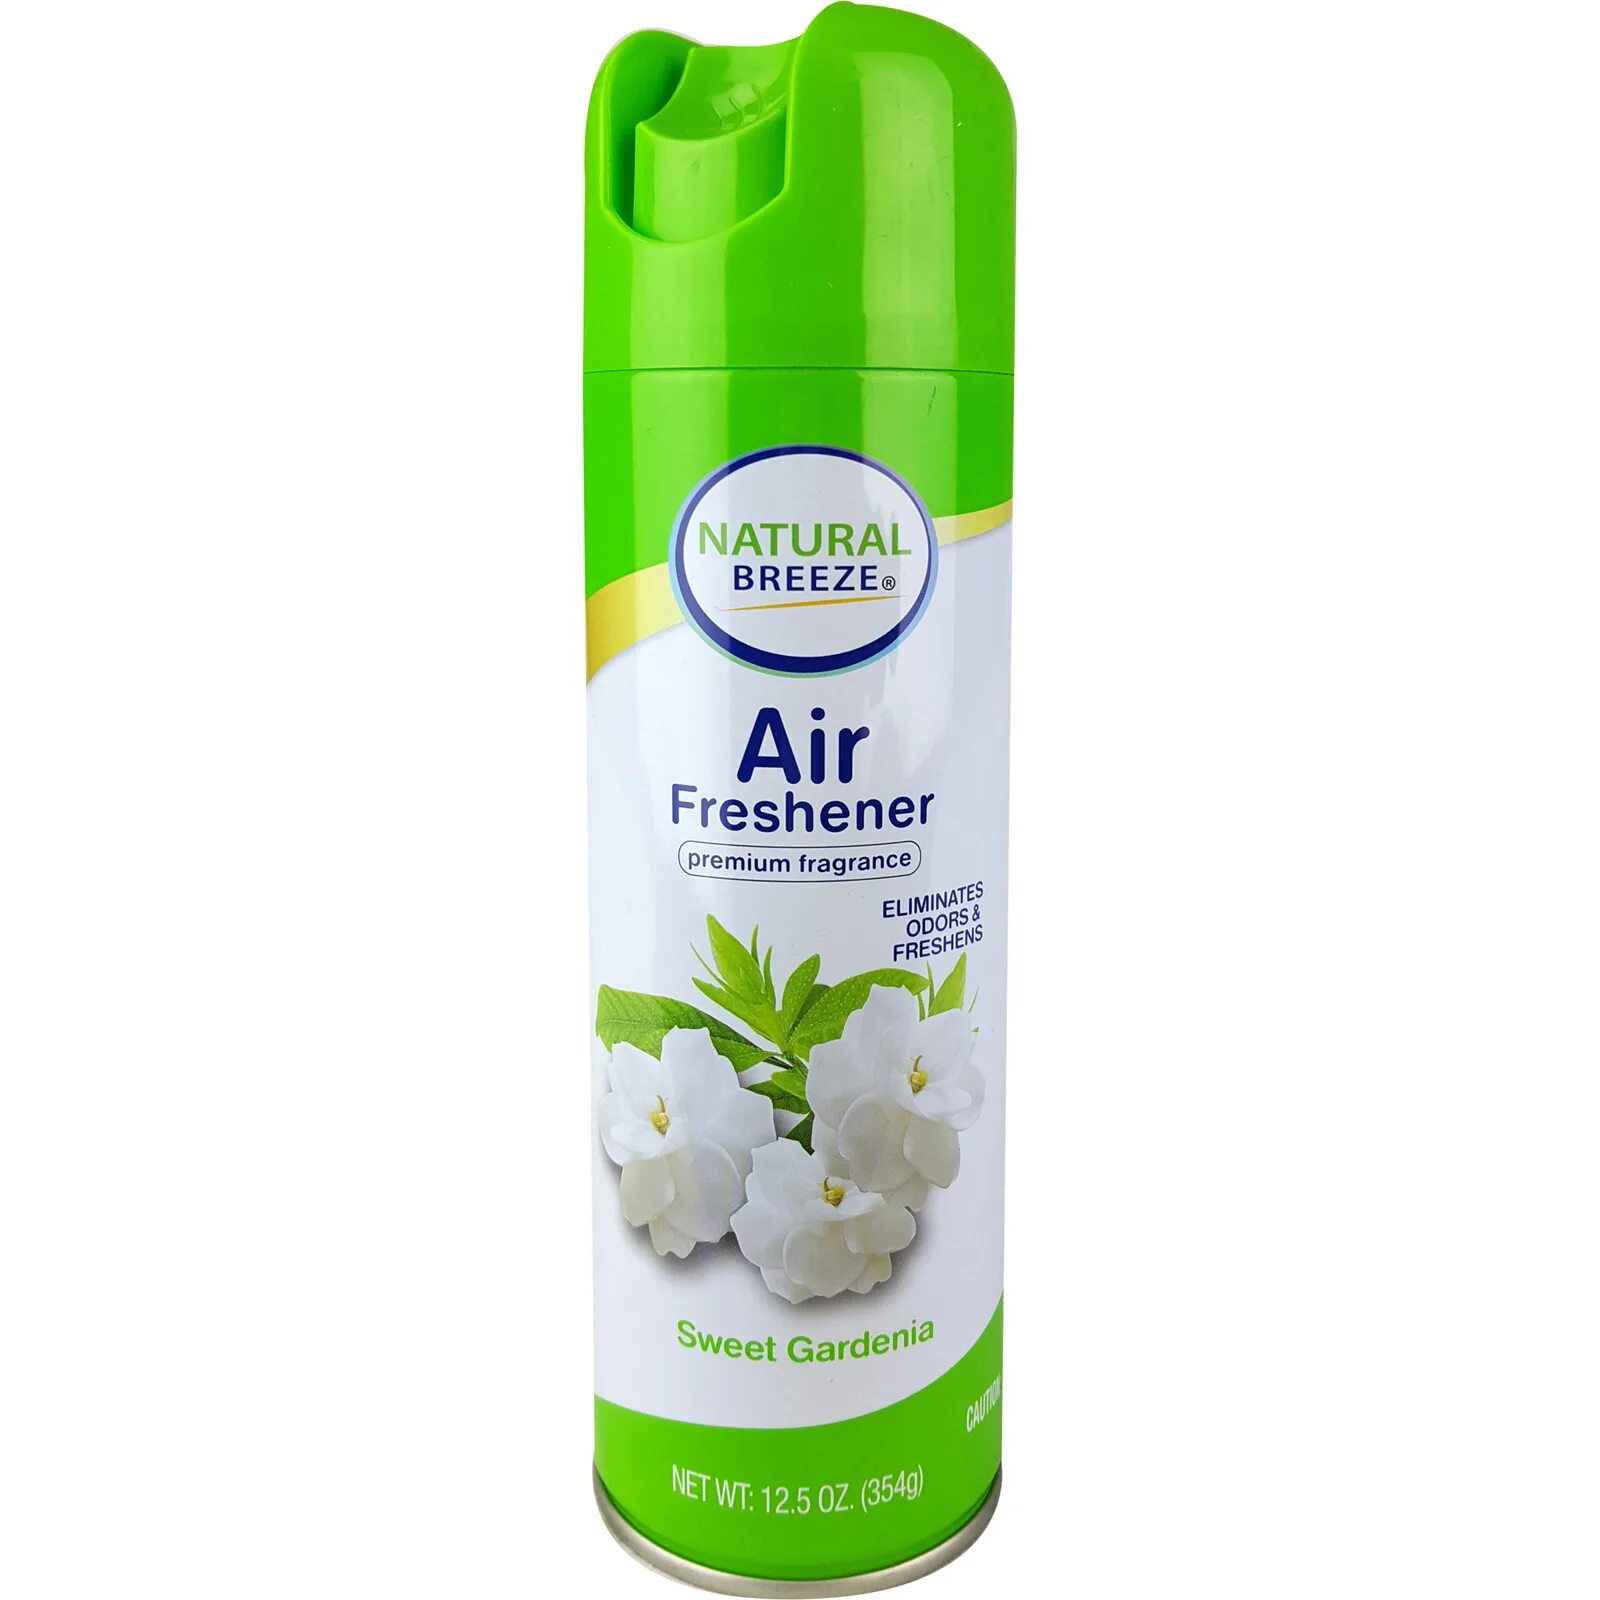 Аир фреш. Fresh Air освежитель воздуха. Storm Air Freshener. Освежитель спрей gardenia. Освежитель воздуха NEWBRITE Air Freshener & Deodorizer.